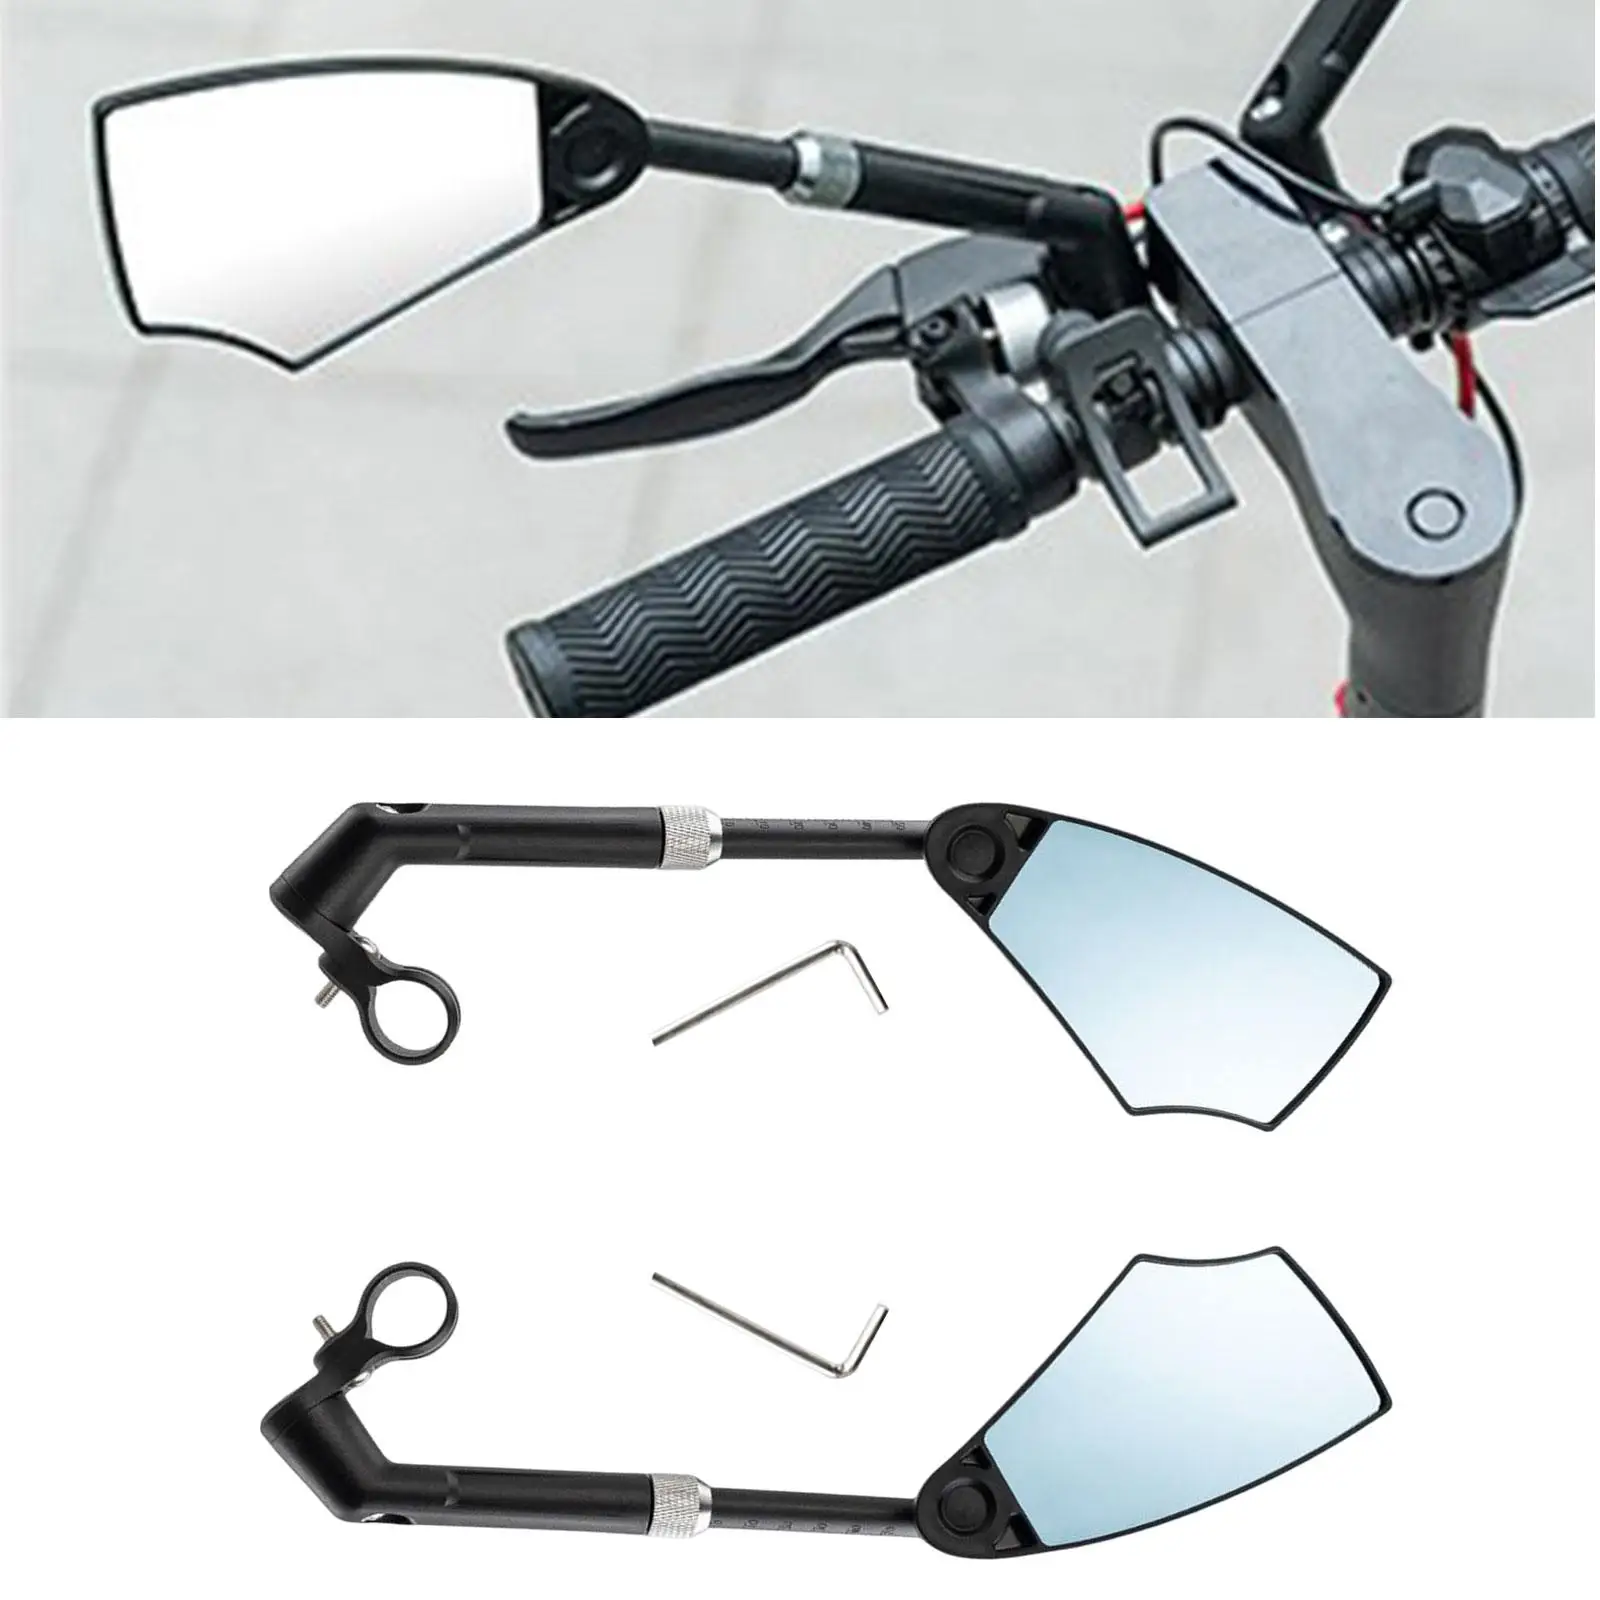 Bike Rear View Mirror Handlebar Universal Long 20-23mm Cycling Mirrors Bike Rearview Mirror for Modification Adult Cycling